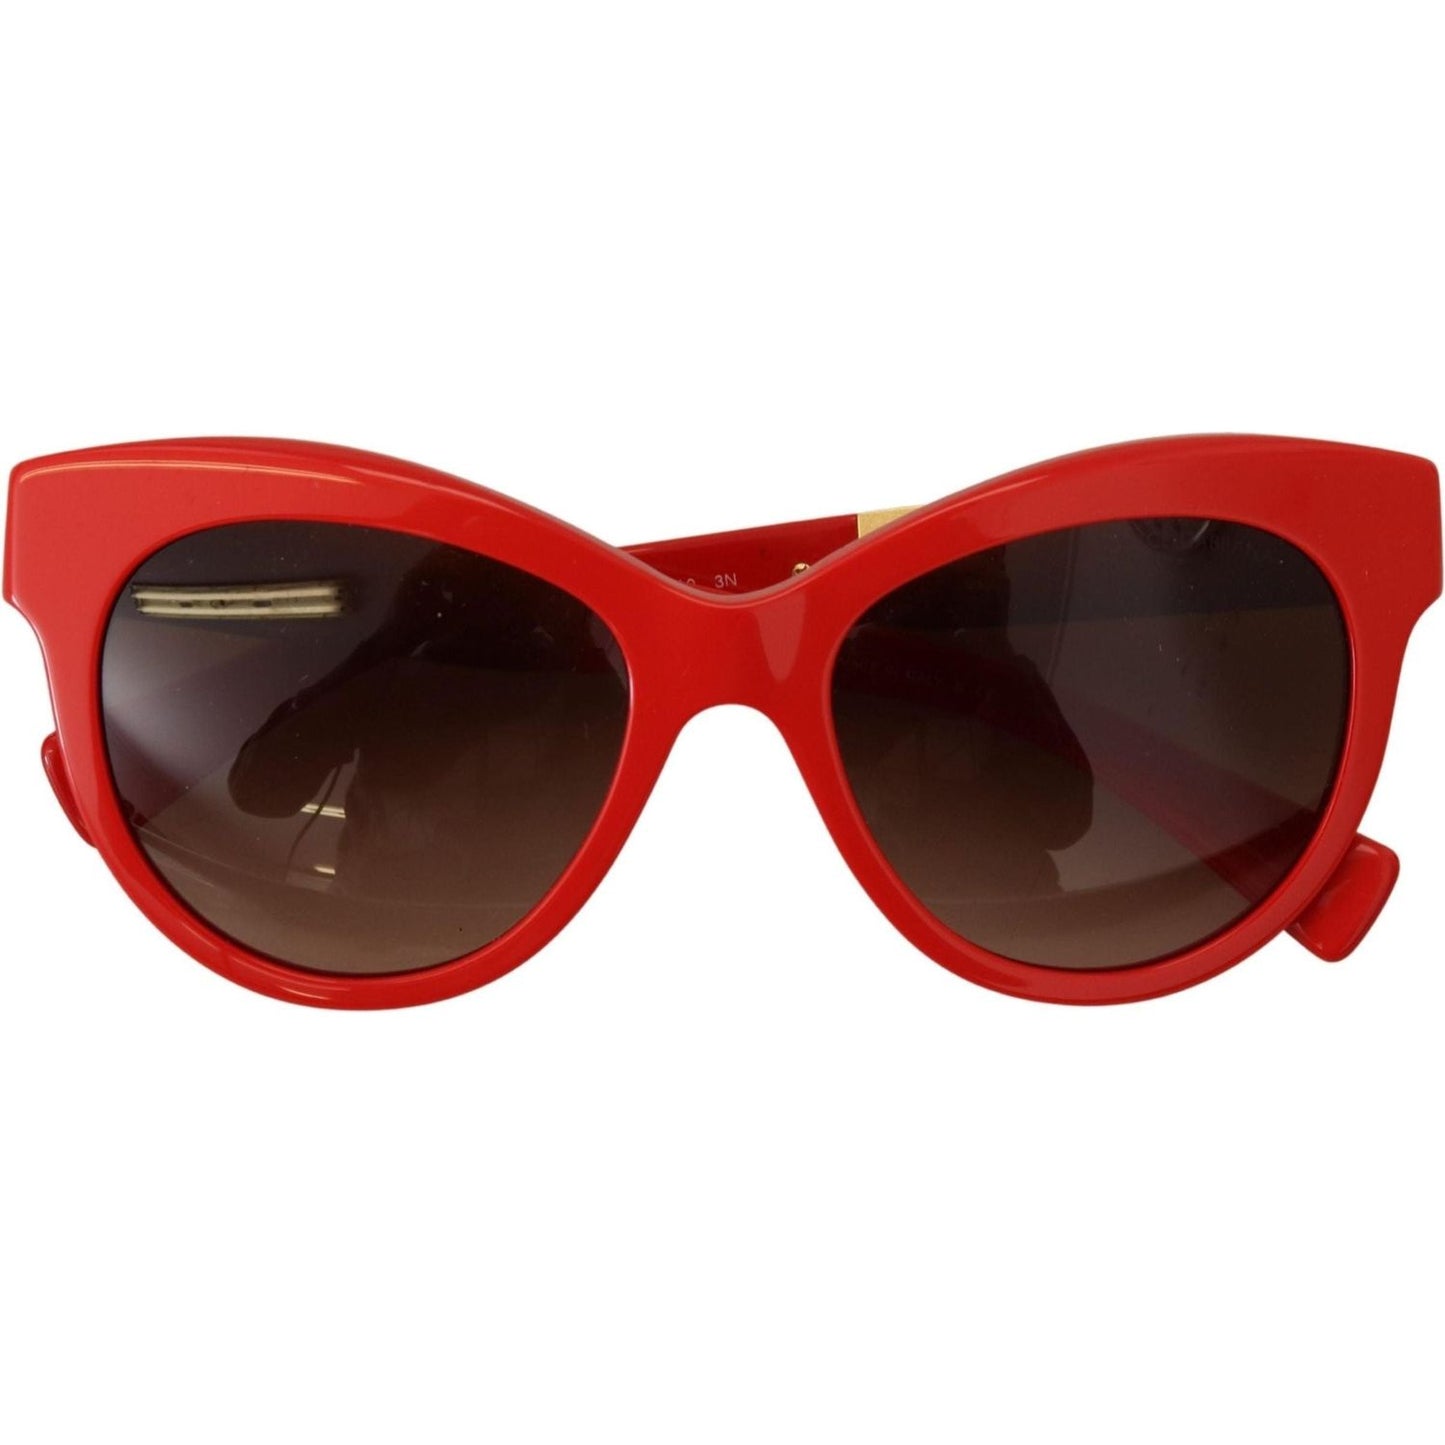 Dolce & Gabbana Elegant Red Mosaico Cat-Eye Sunglasses red-cat-eye-lens-floral-arm-shades-dg4215-sunglasses